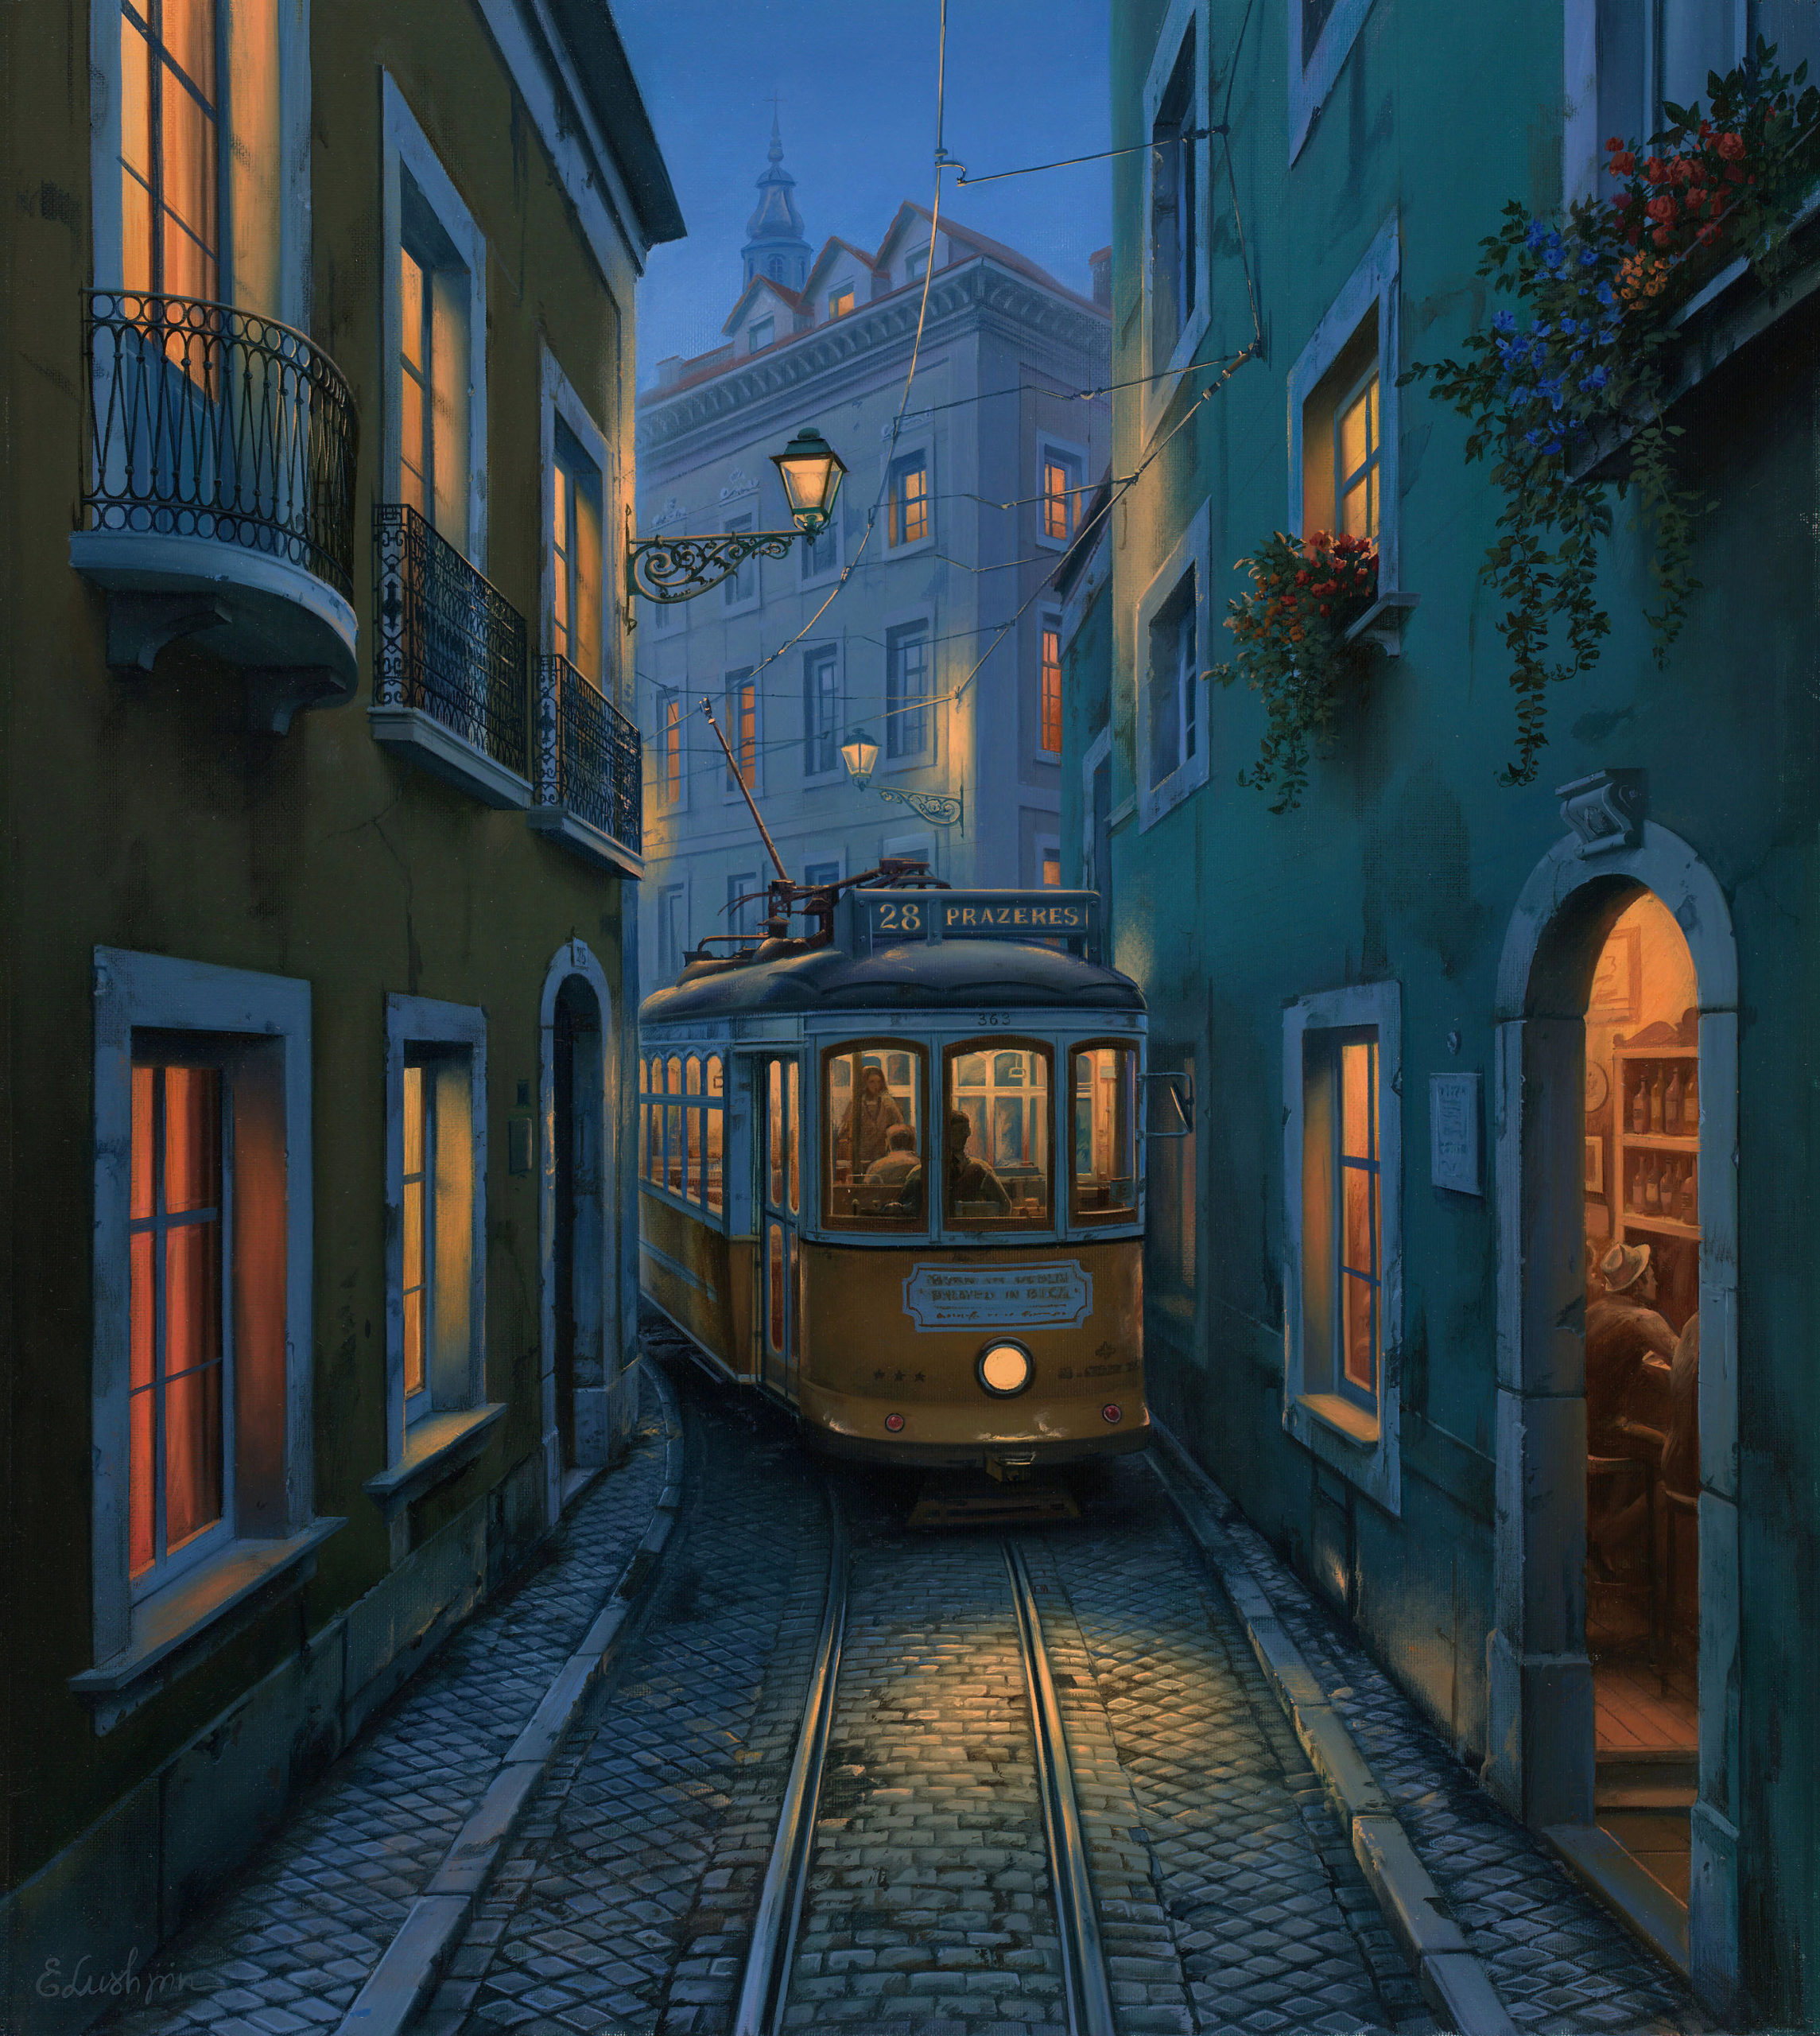 Through Lisbon by Evgeny Lushpin